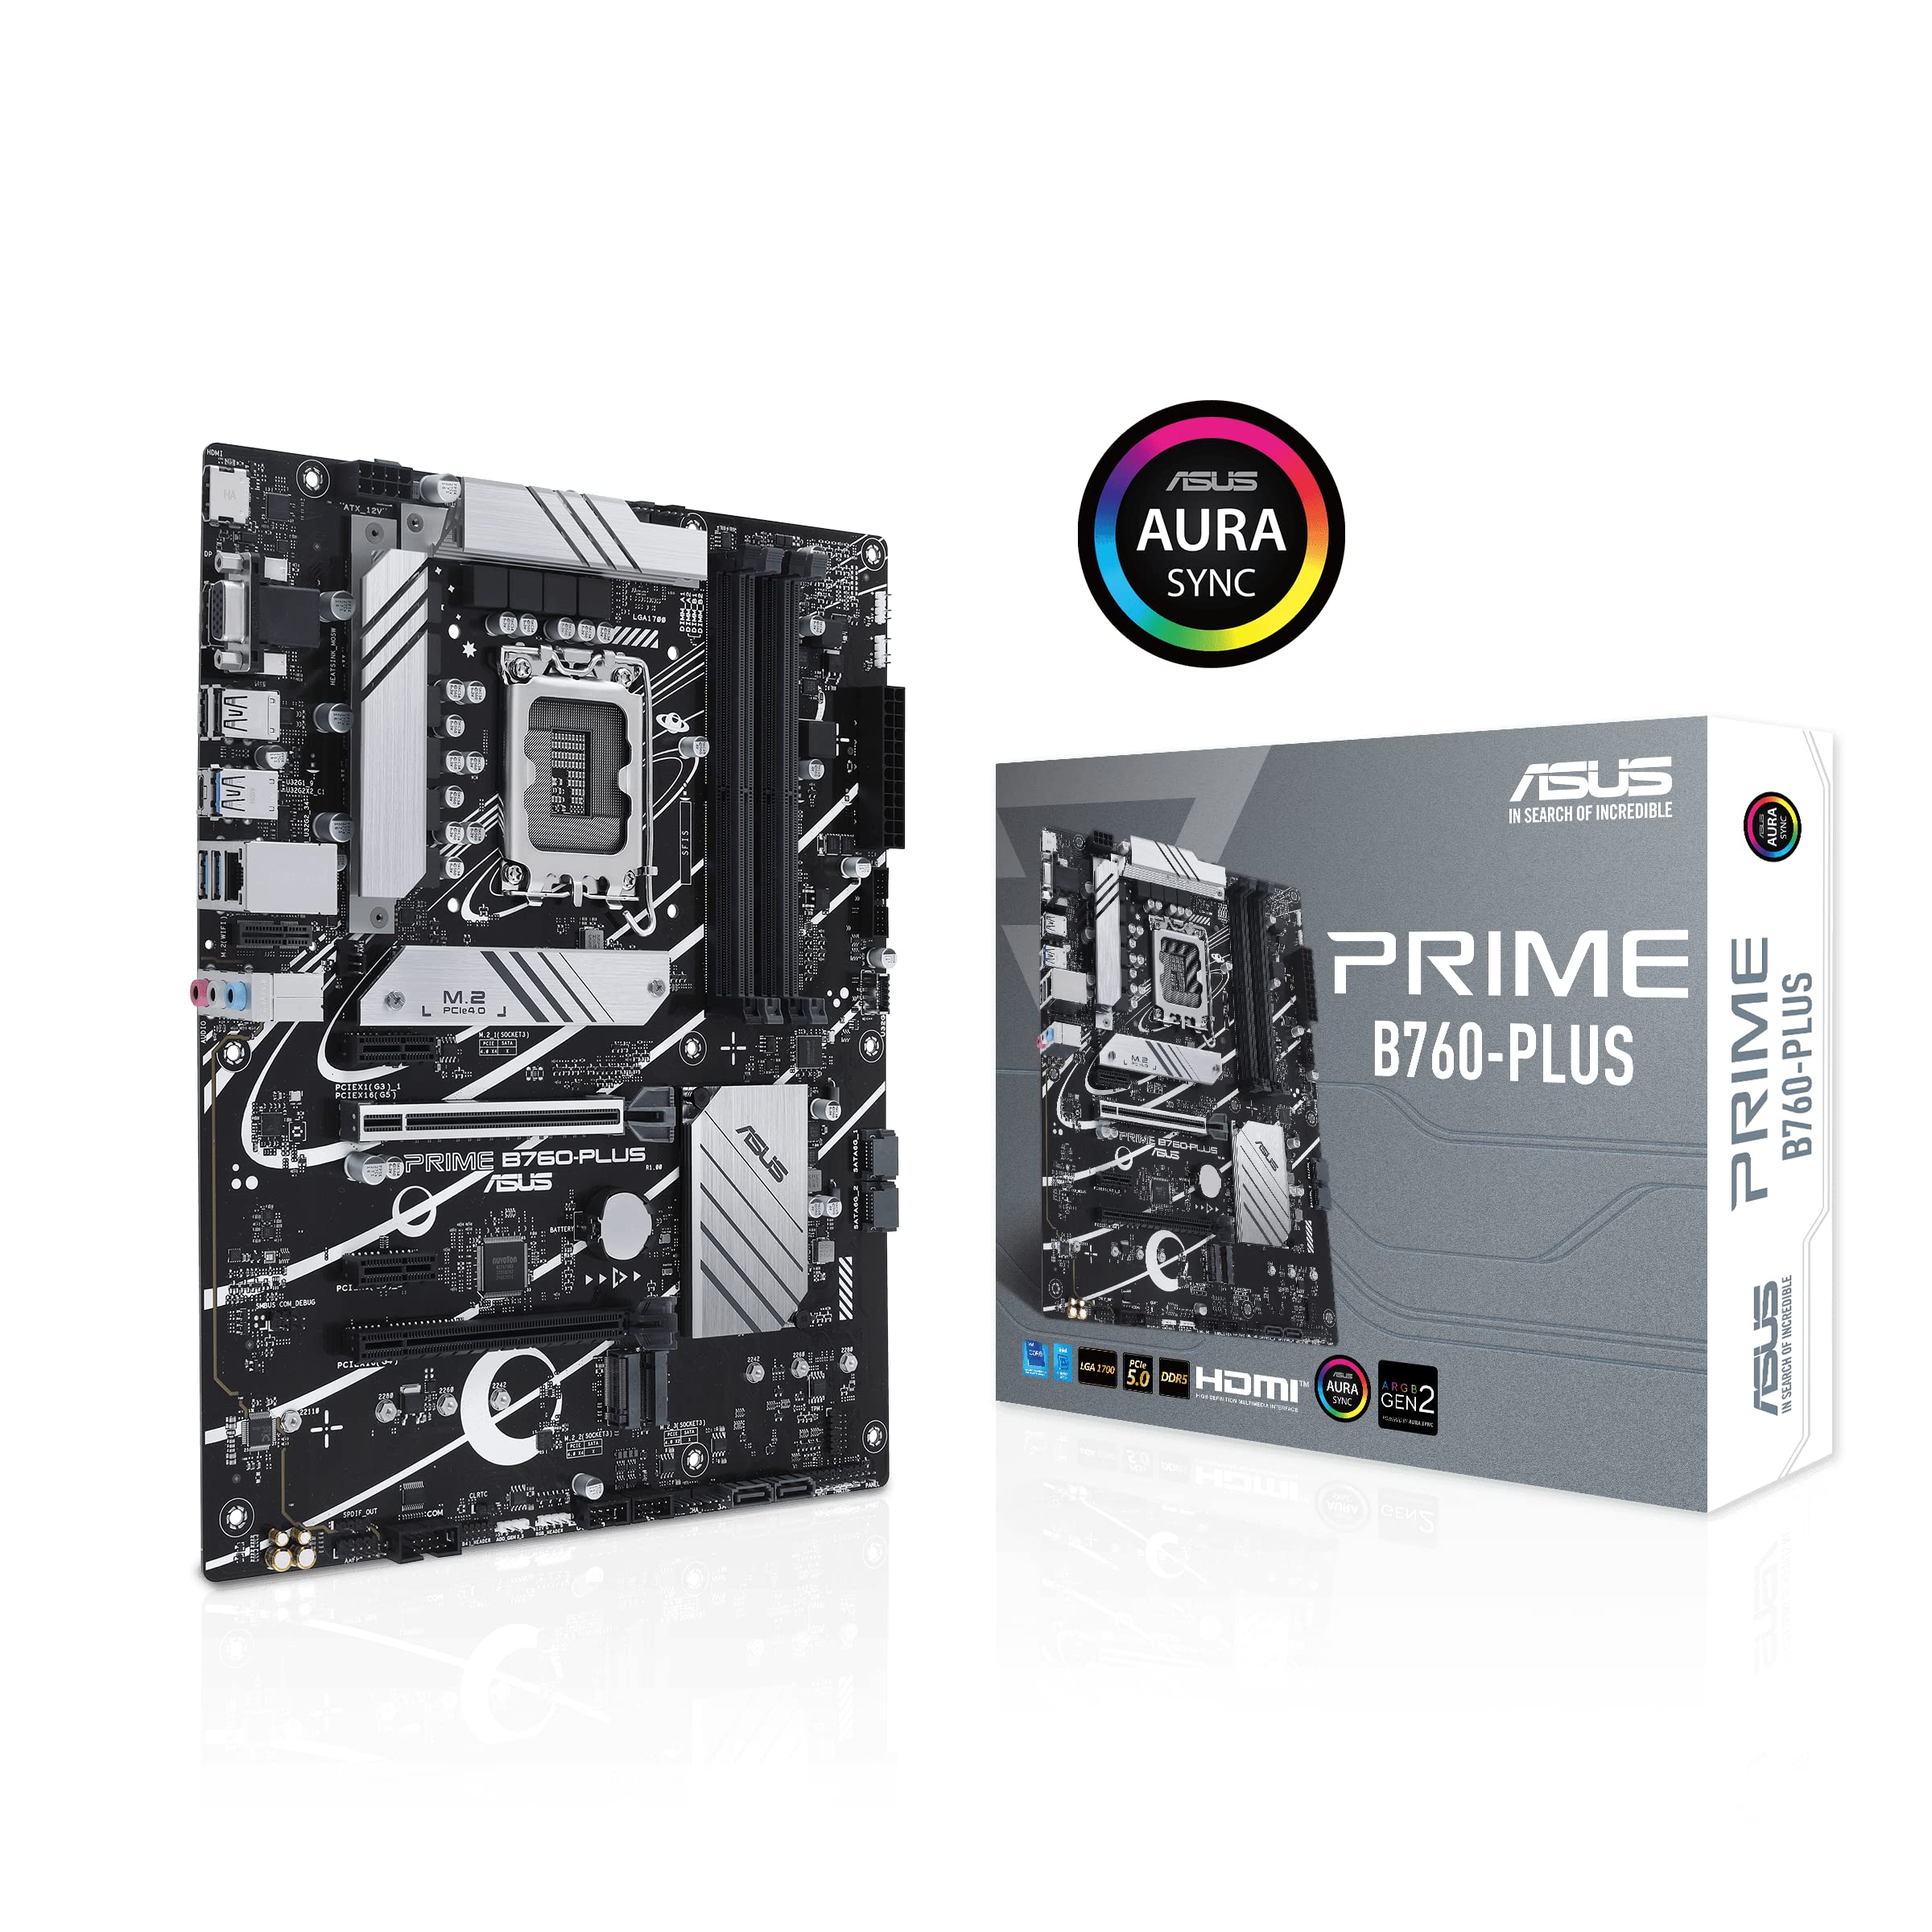 ASUS Prime B760-PLUS Intel B760(13th and 12th Gen) LGA1700 ATX Motherboard PCIe 5.0,DDR5,3X PCIe 4.0 M.2 Slots,2.5Gb LAN, DP,HDMI,USB 3.2 Gen 2x2 Type-C,Front USB 3.2 Gen 1 Type-C,Thunderbolt (USB4)